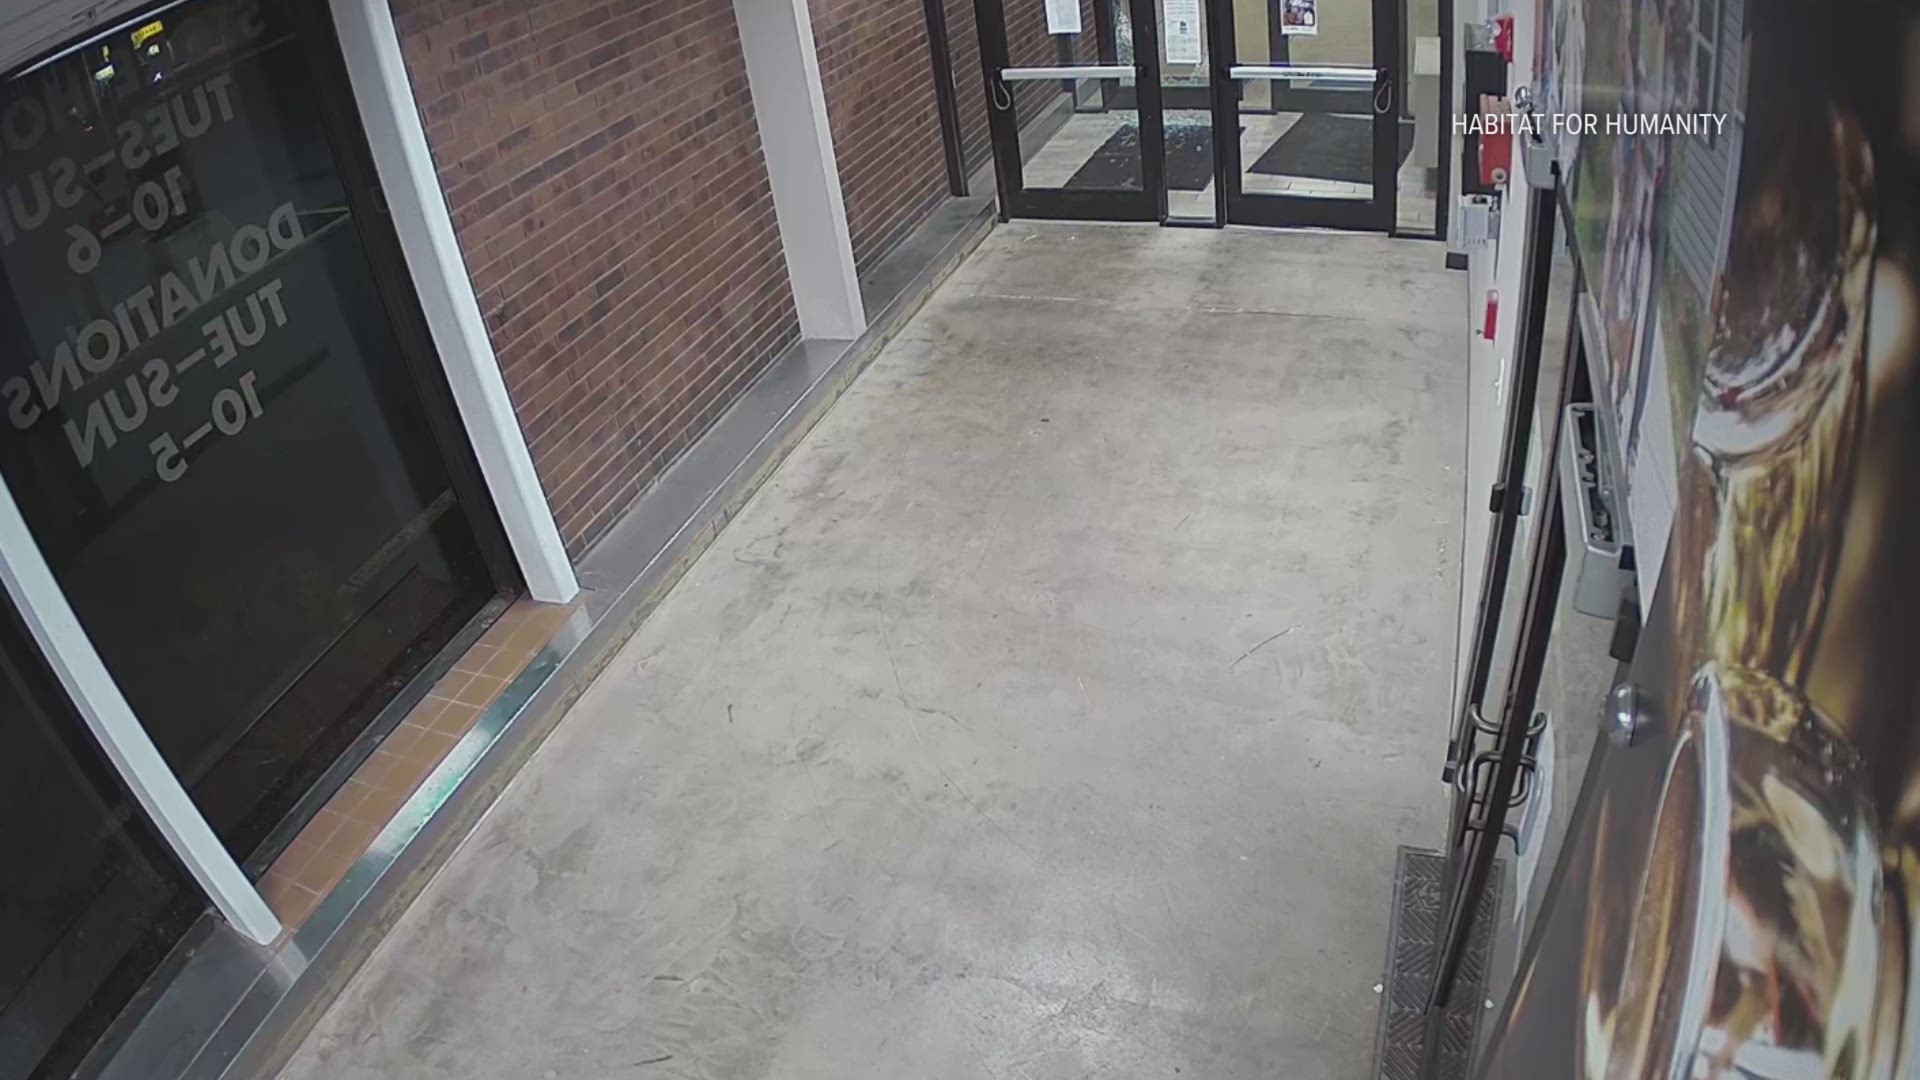 Surveillance video captured a break-in at Habitat for Humanity Saint Louis' ReStore.